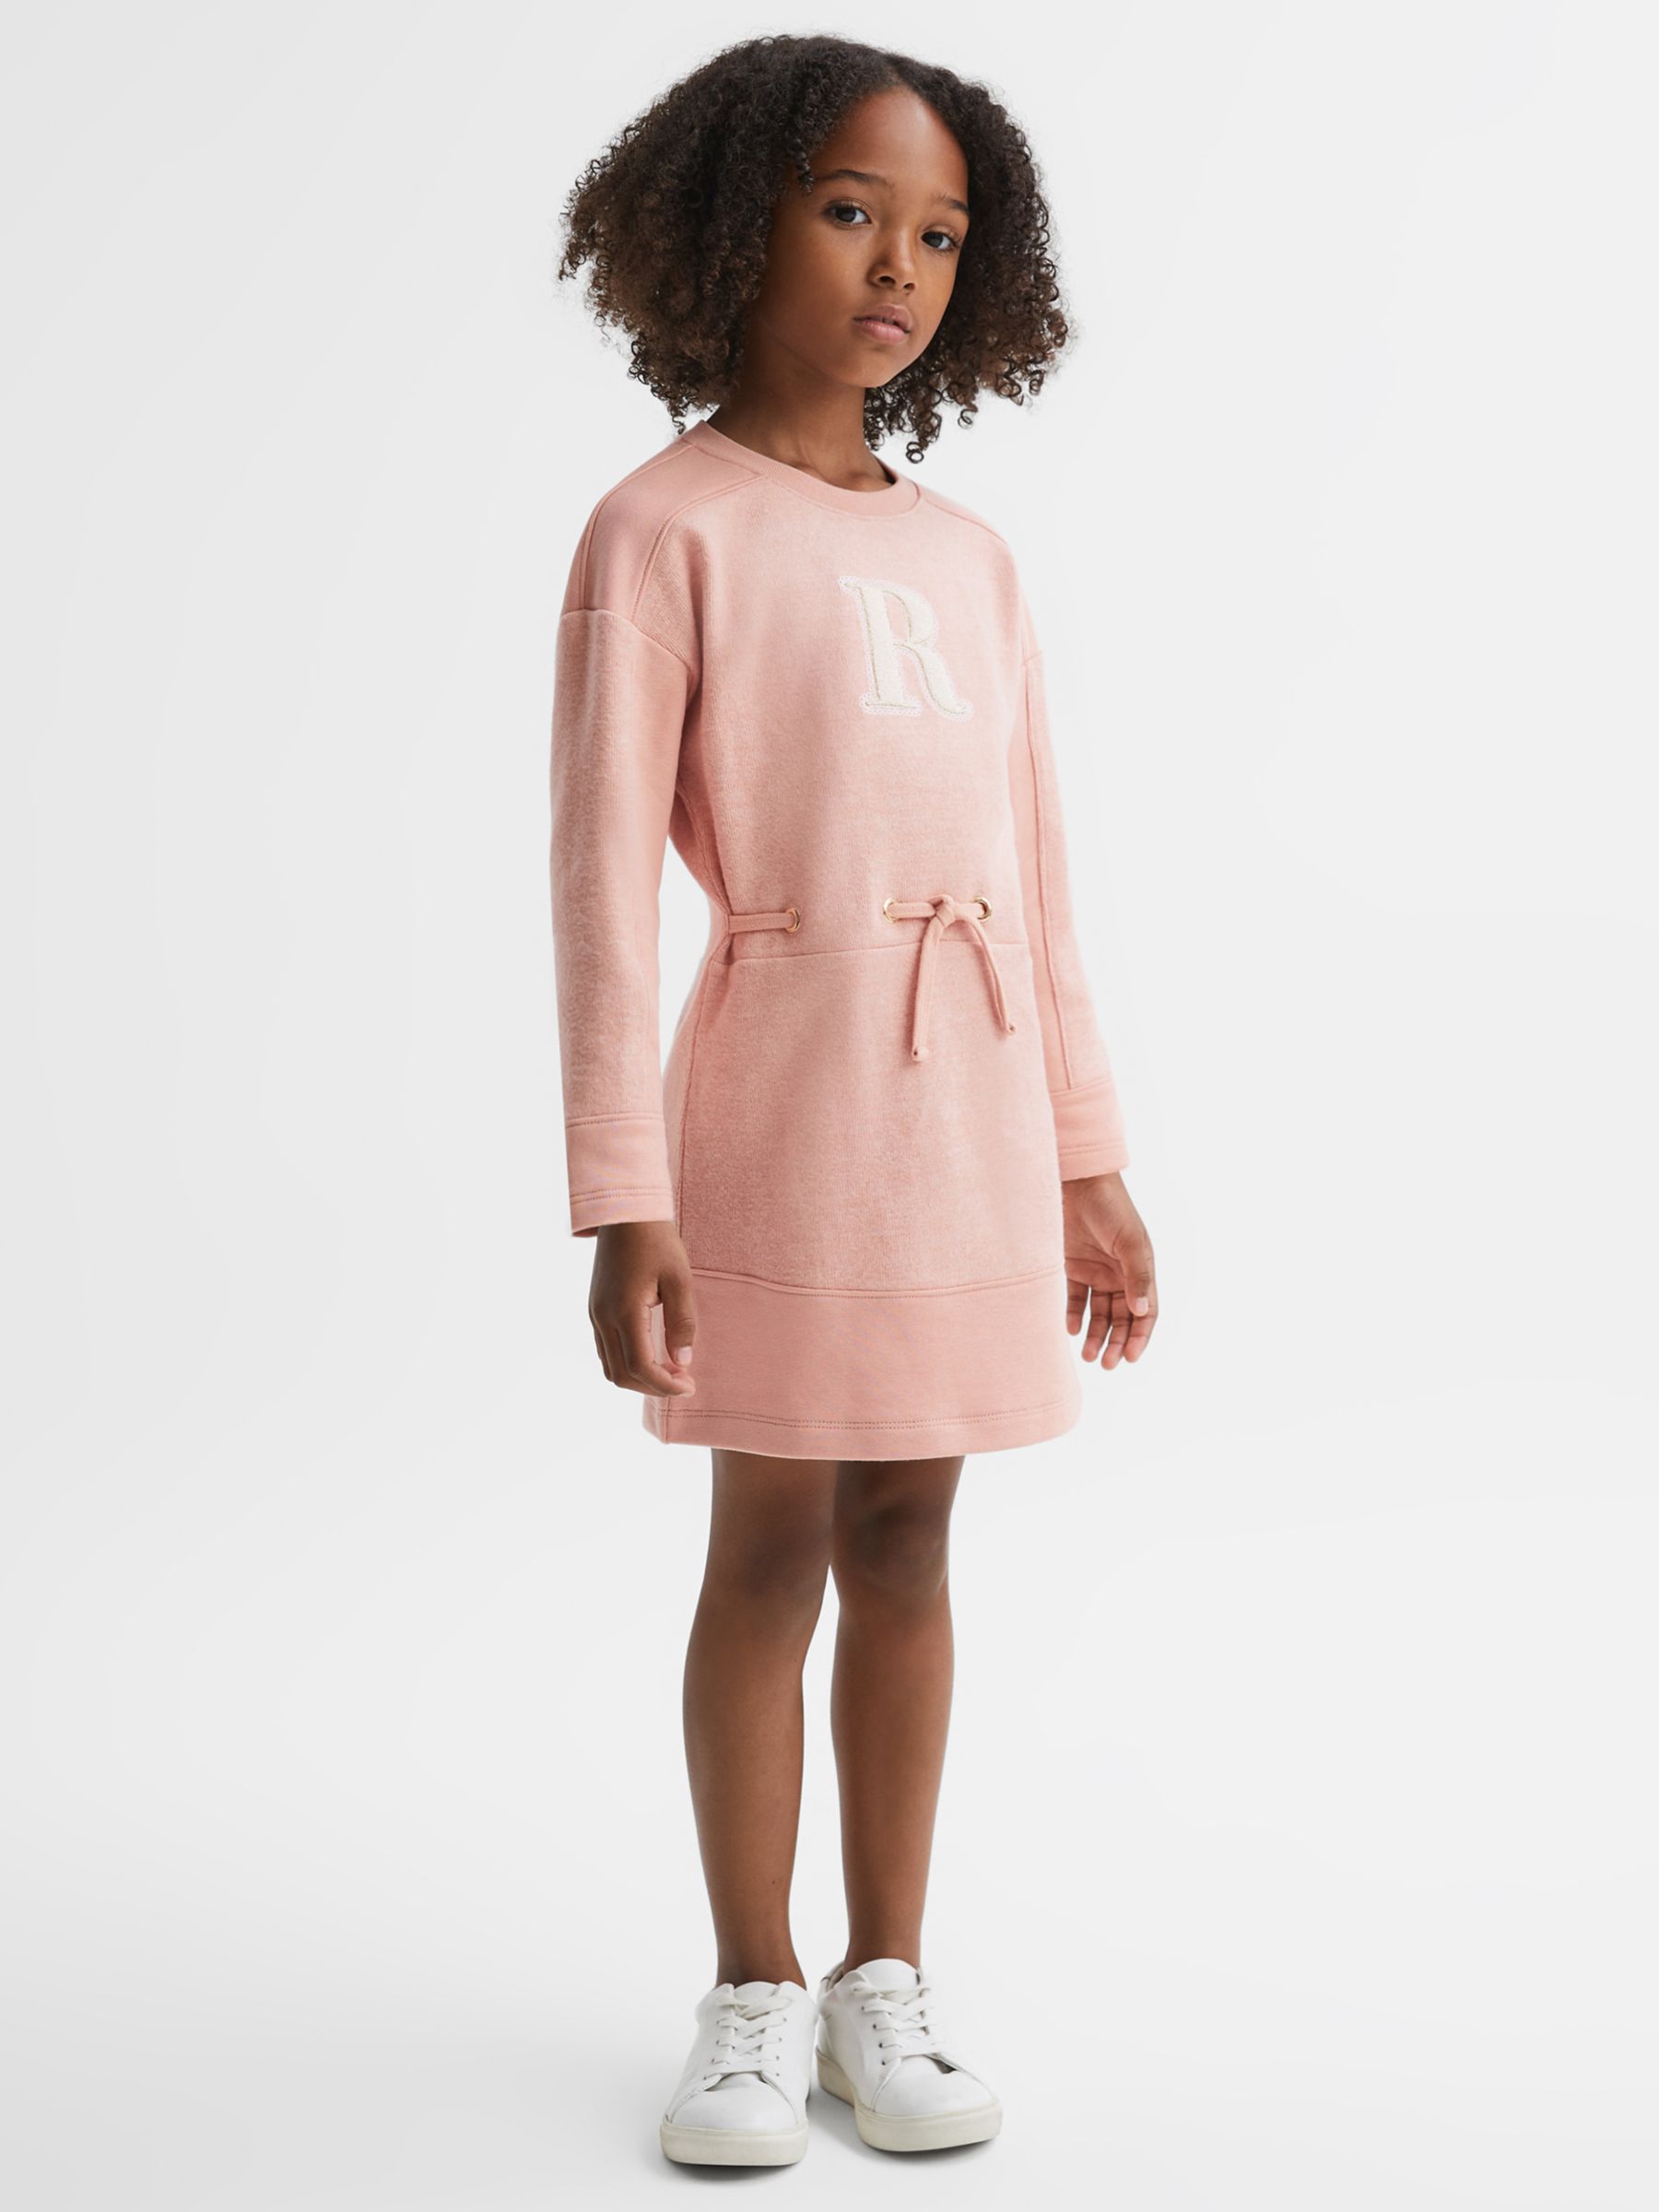 Reiss Kids' Ella Jersey Dress, Apricot, 8-9 years